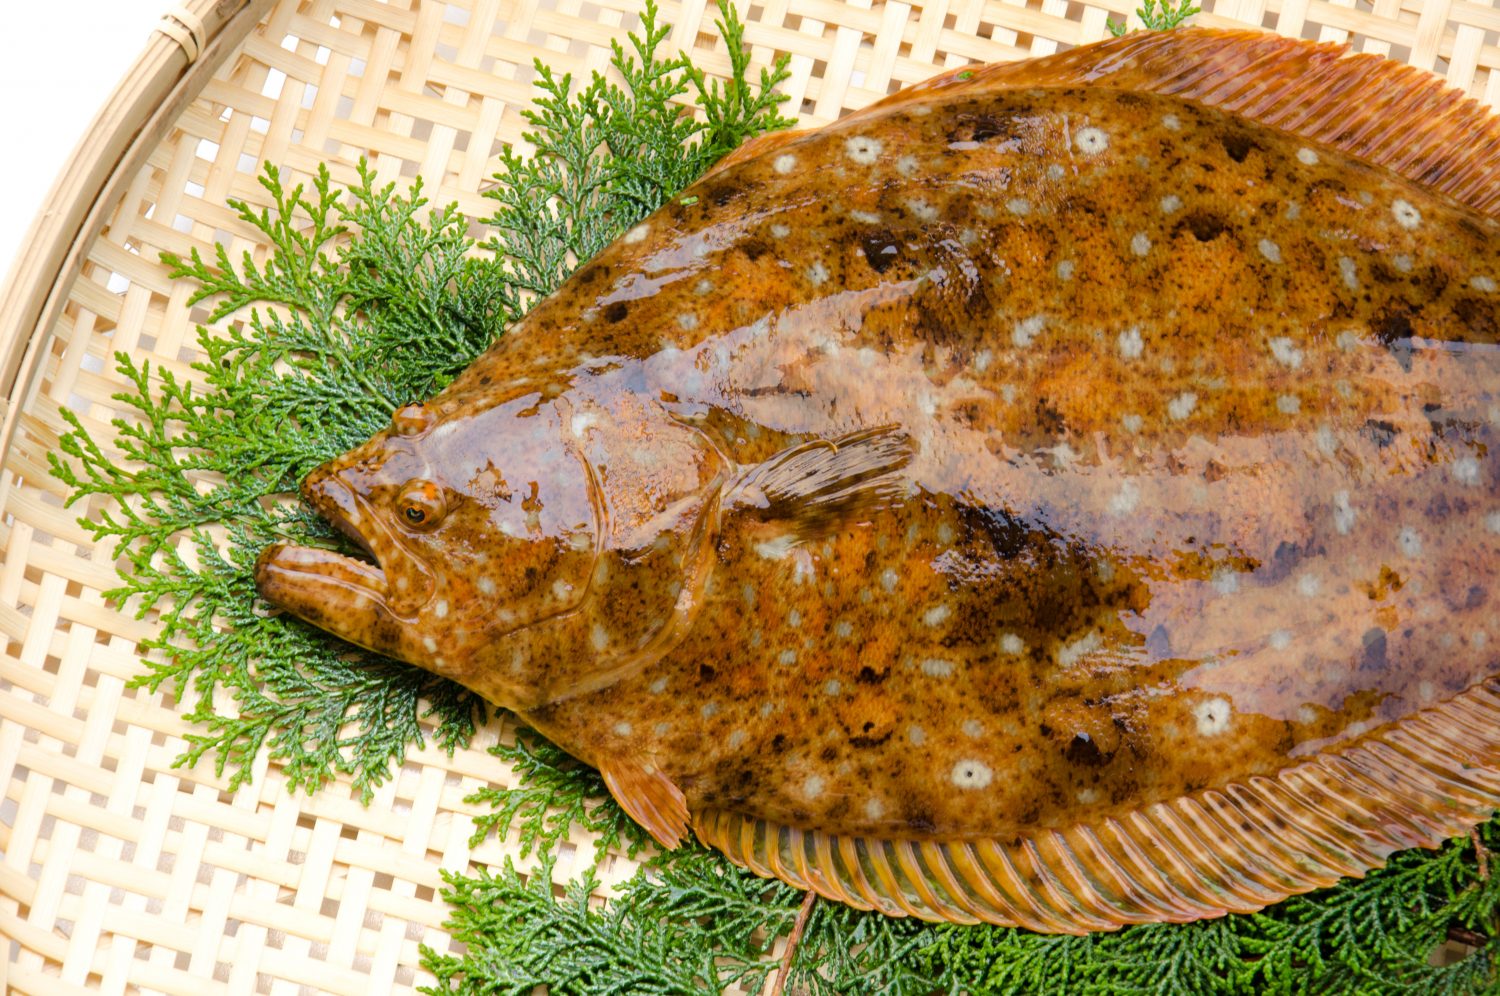 Japanese flounder